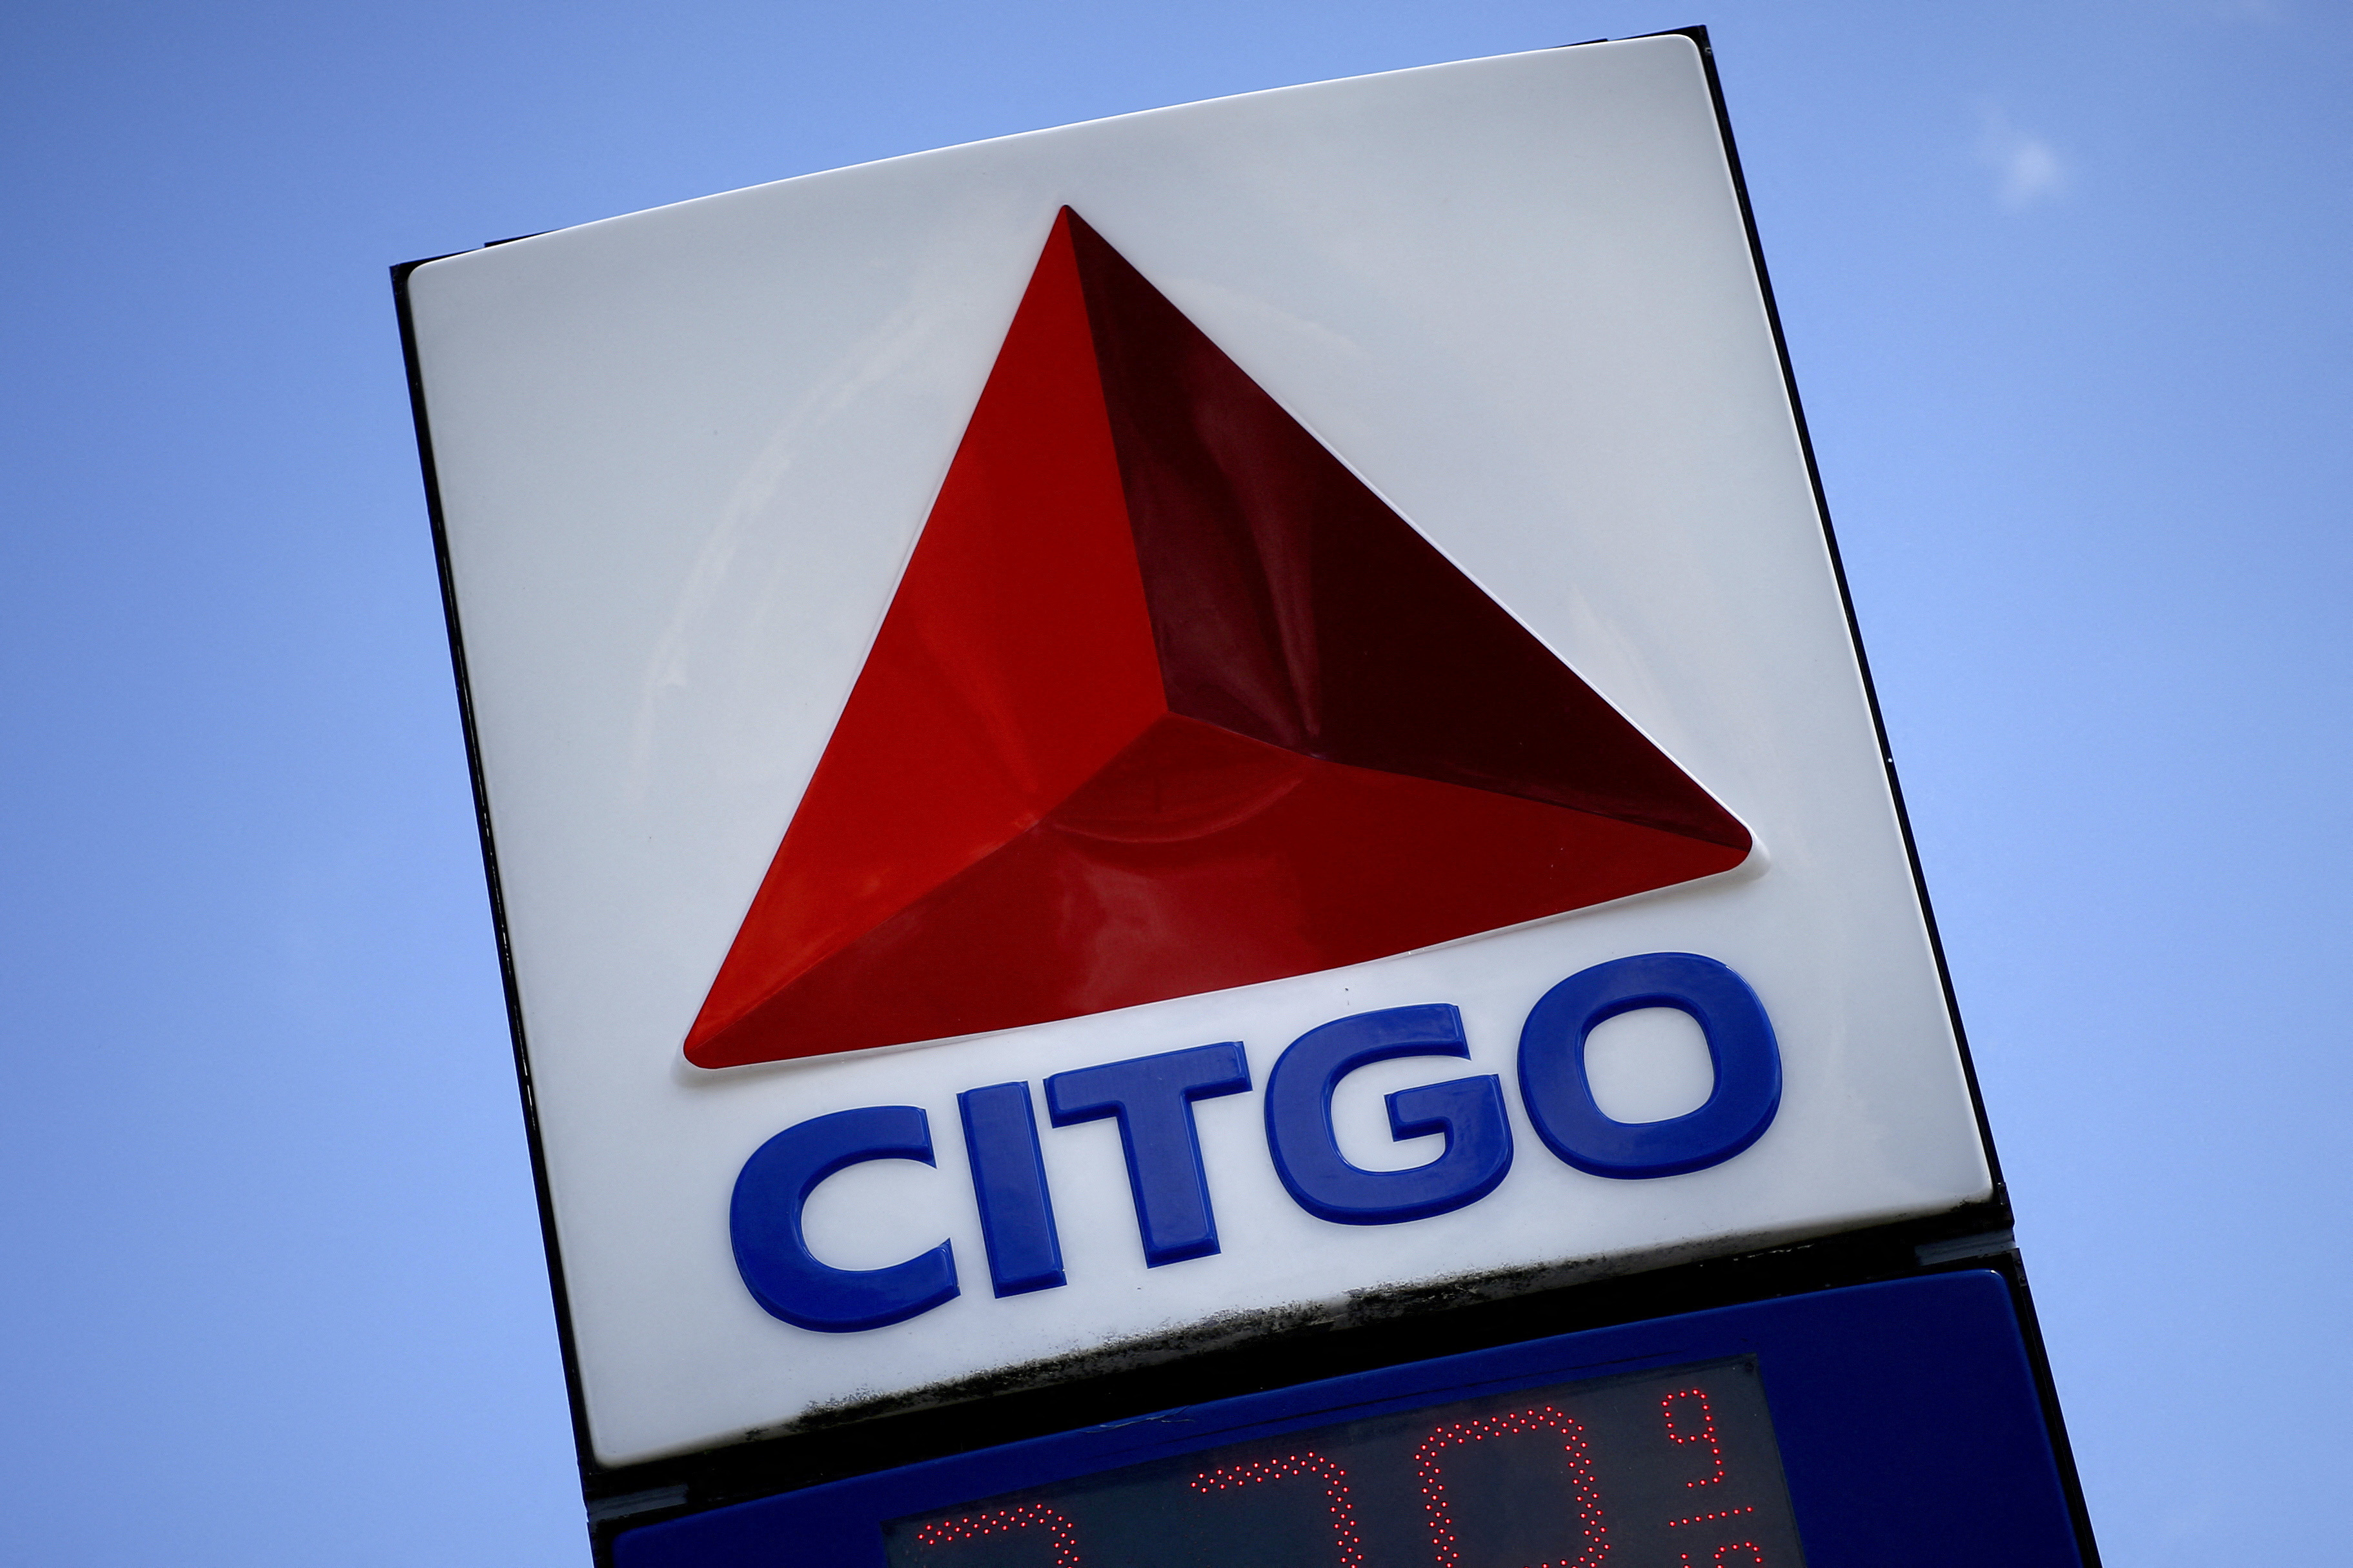 US court sets Oct. 23 start for Citgo share auction process